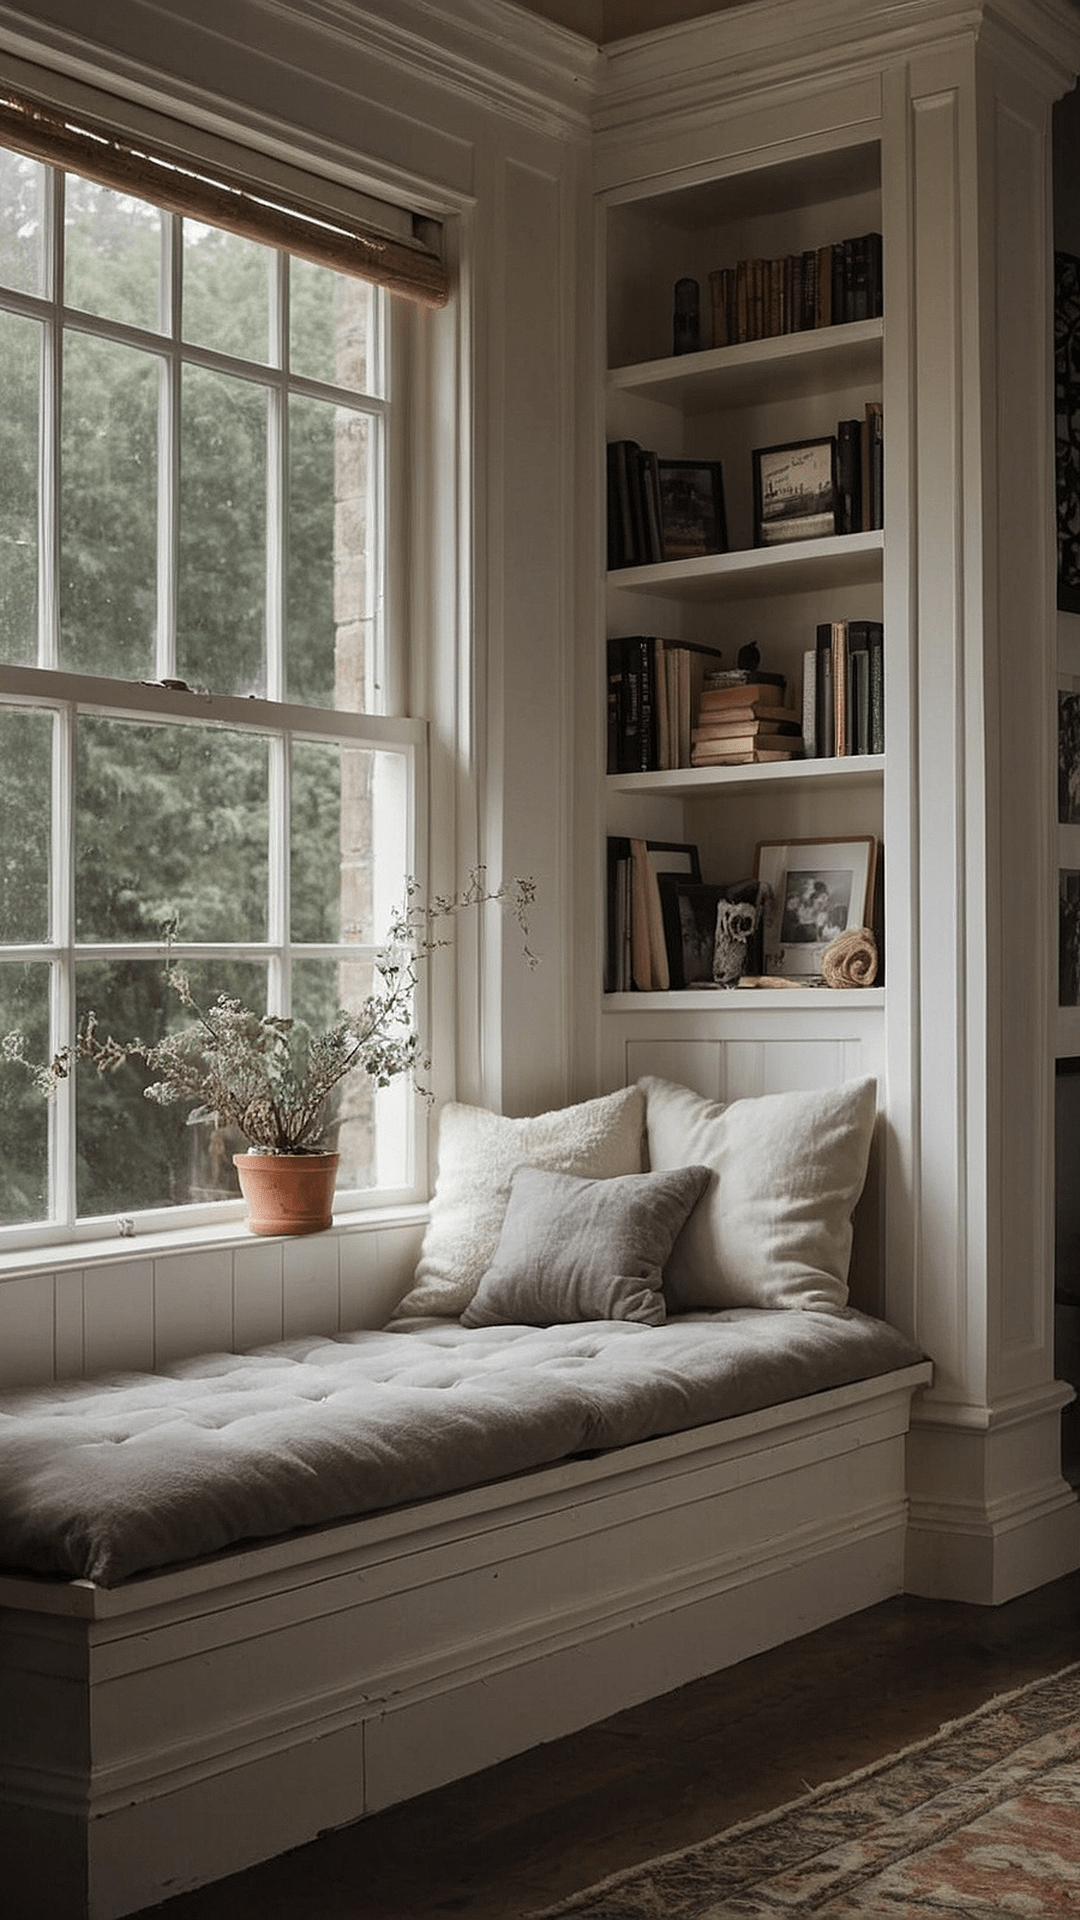 Loft Conversion Ideas into a Cozy Reading Space